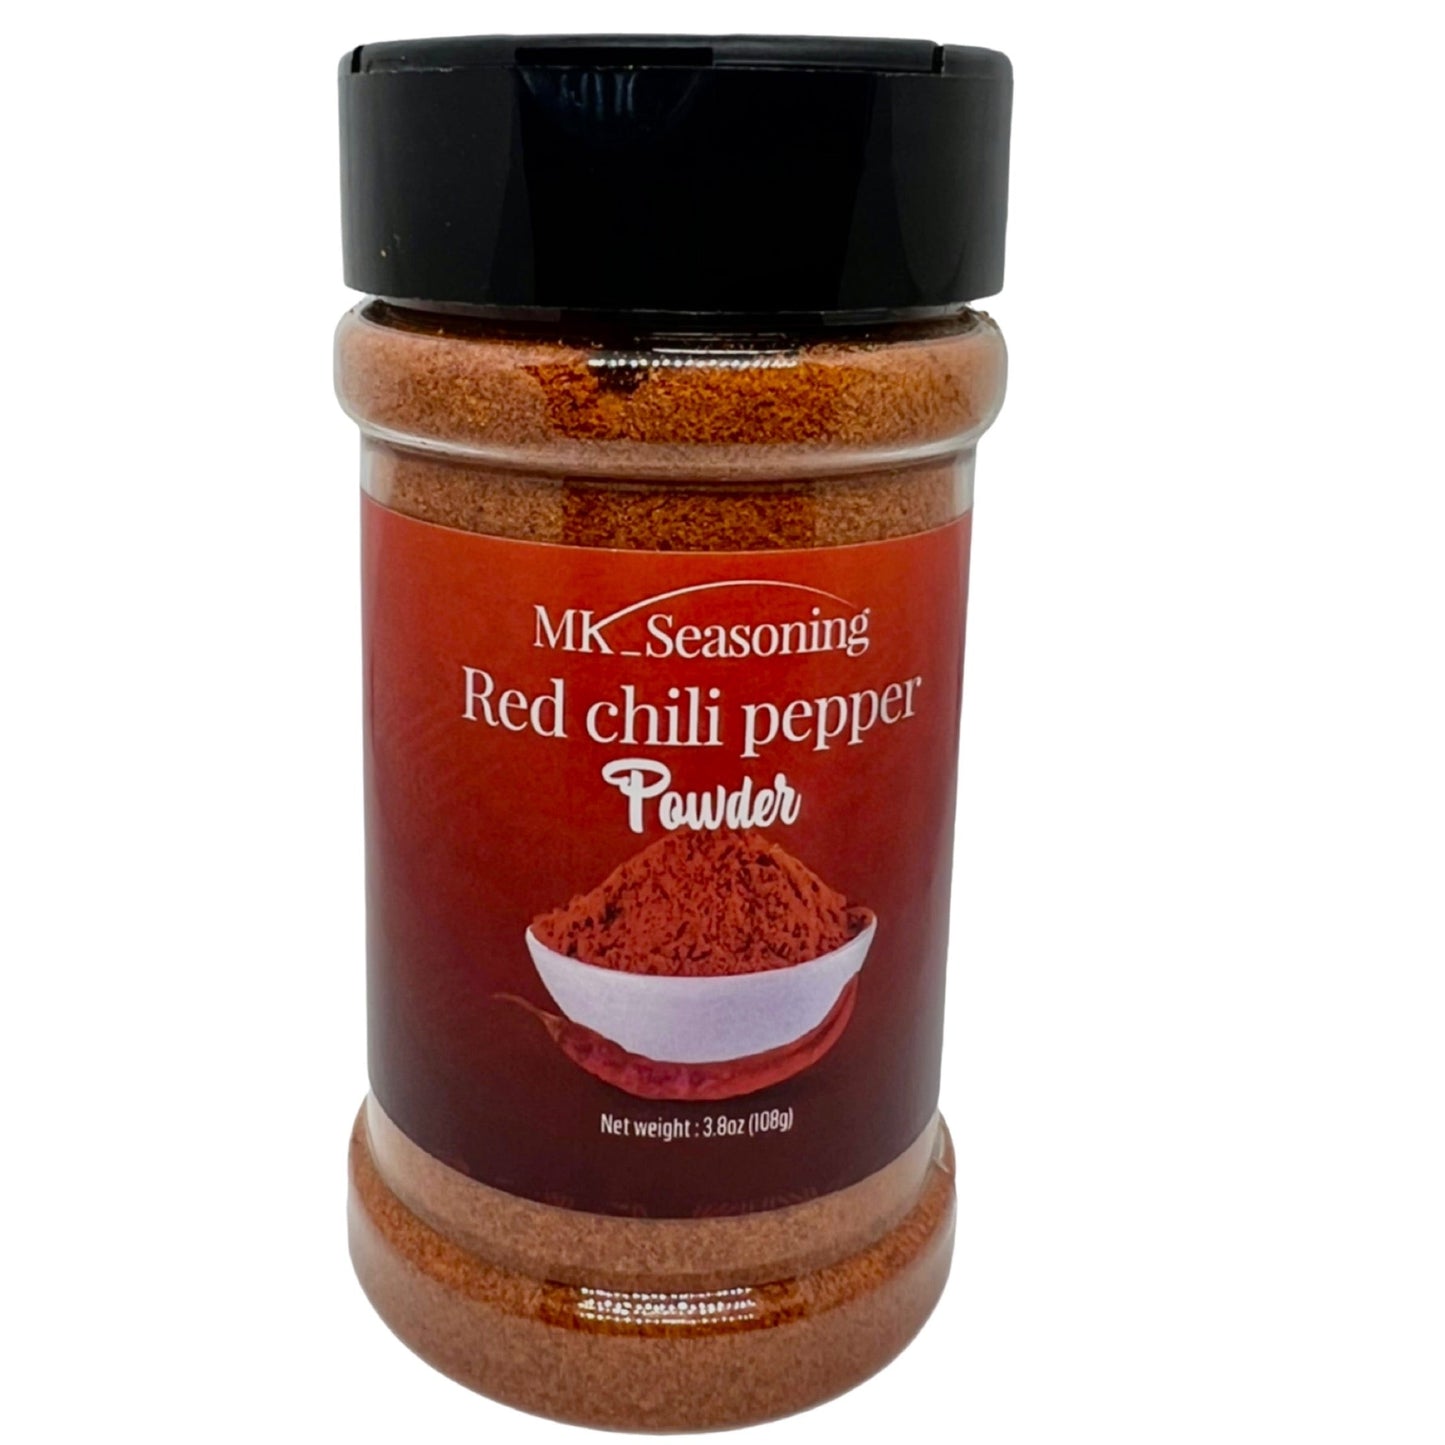 Dry red chili pepper powder